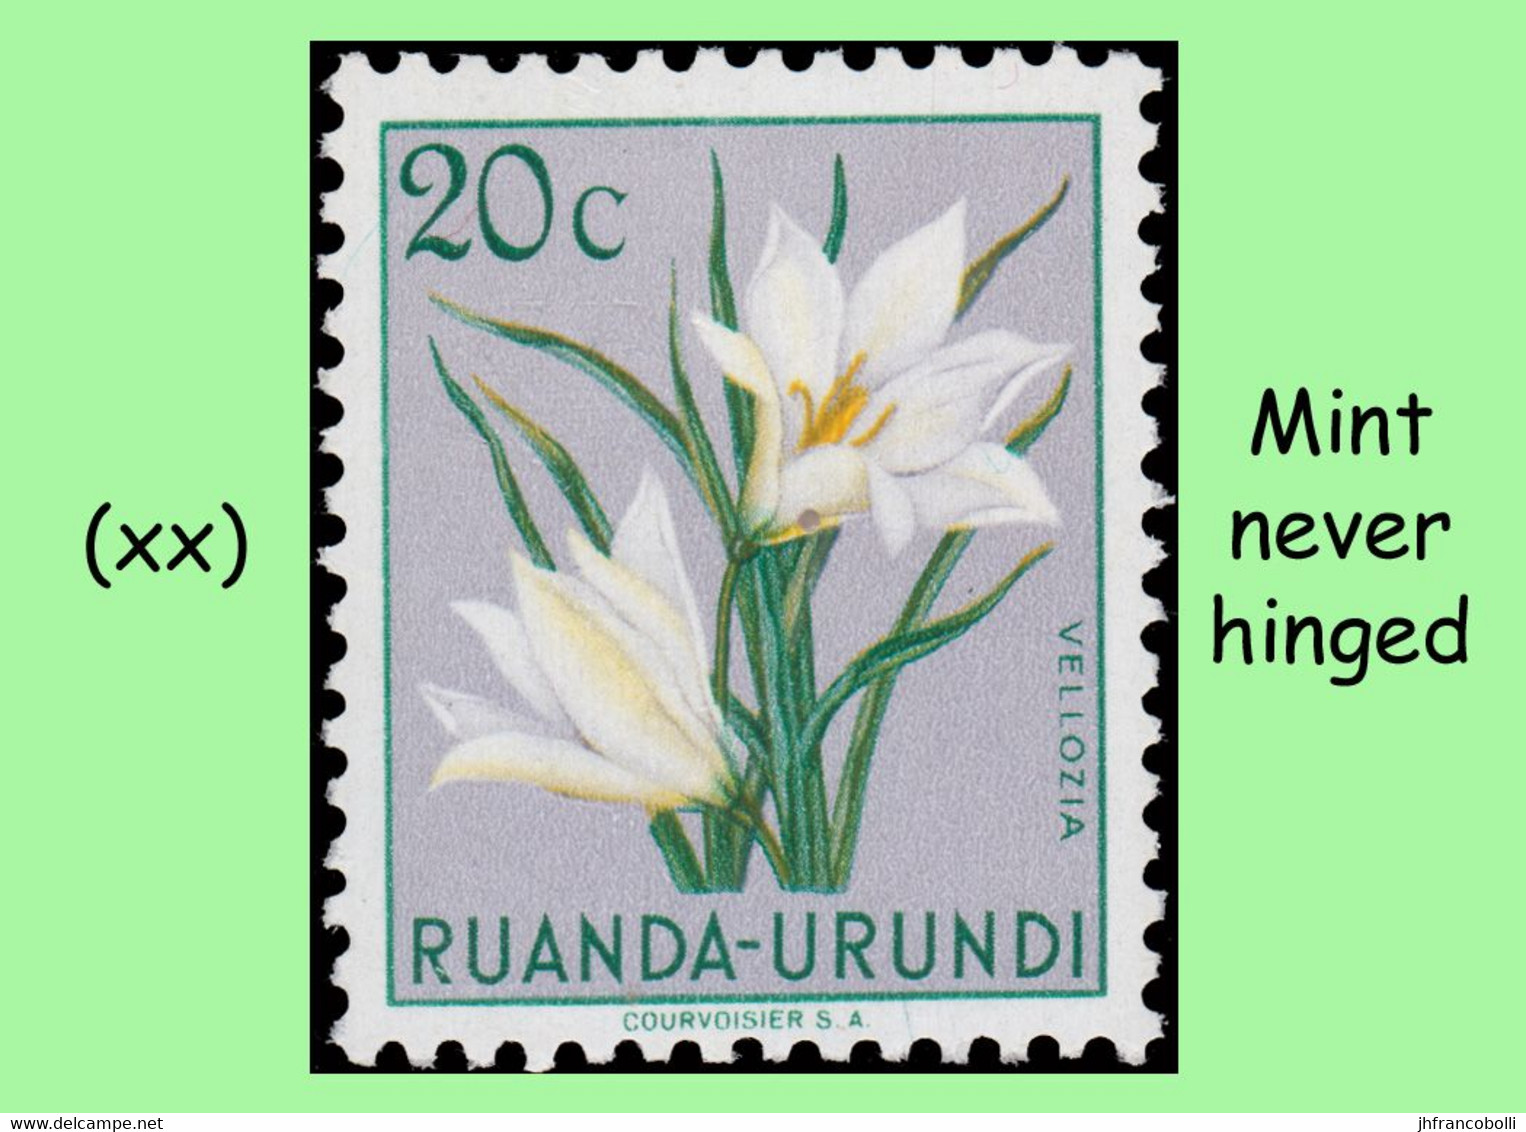 1953 ** RUANDA-URUNDI RU 177/195 MNH TROPICAL FLOWERS SET  ( x 19 stamps )